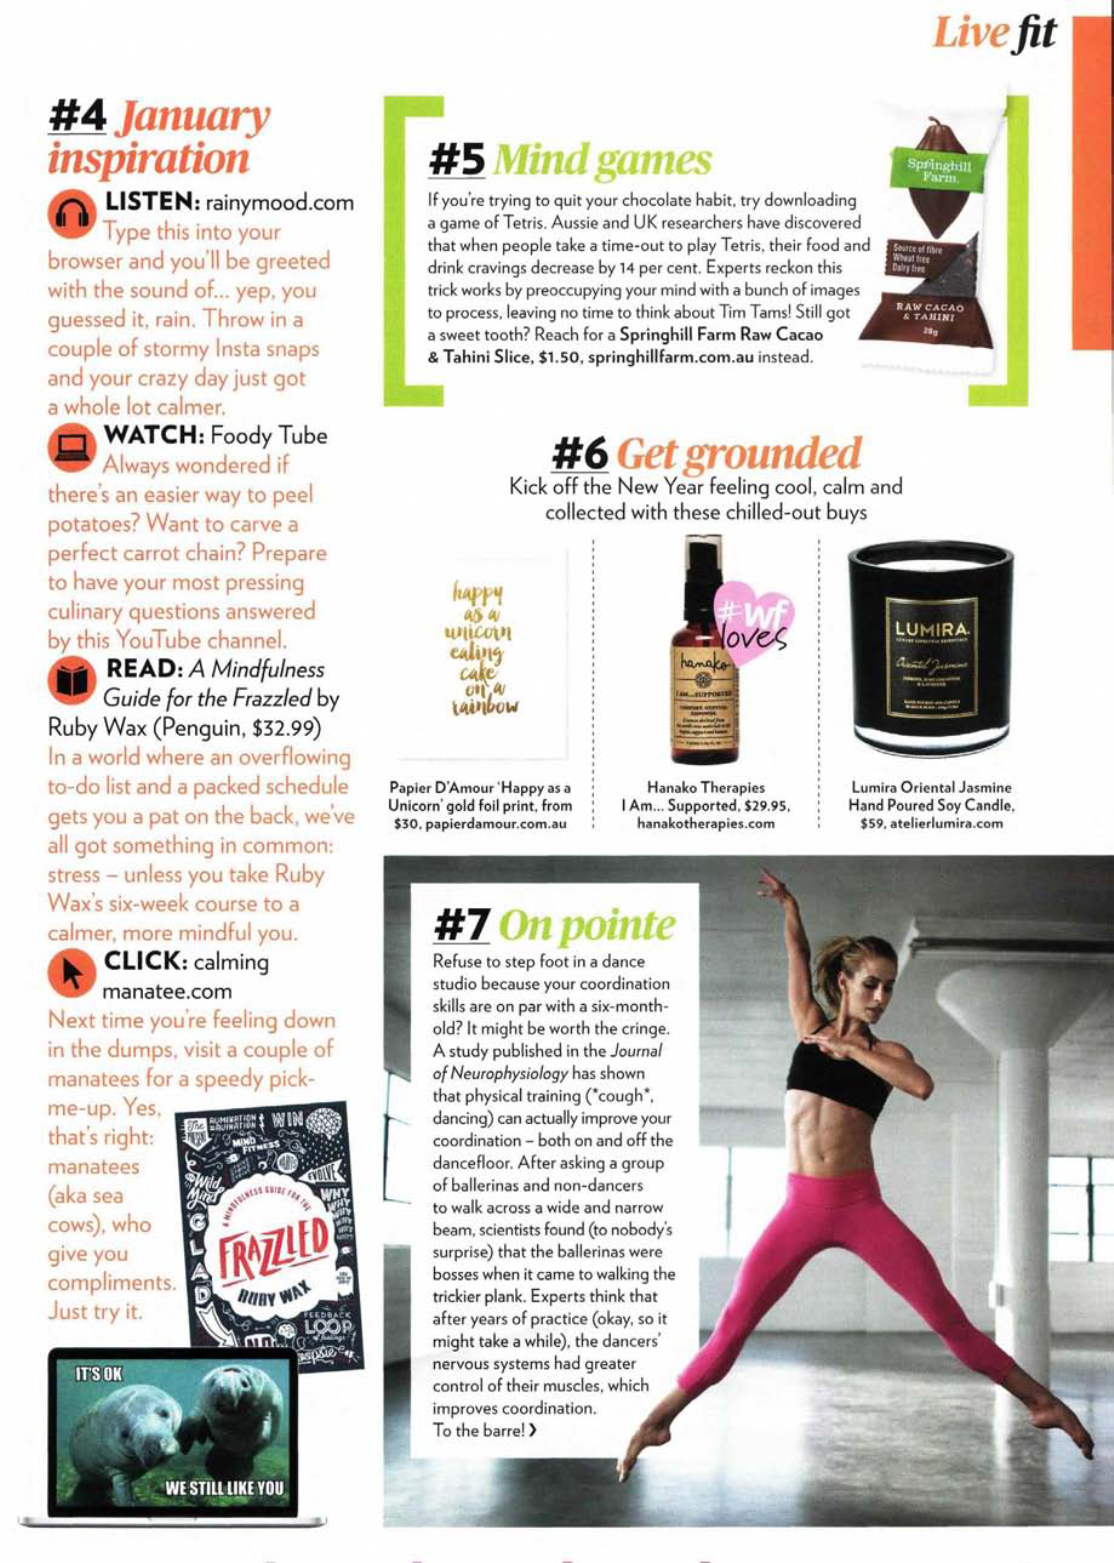 Women's Fitness Magazine